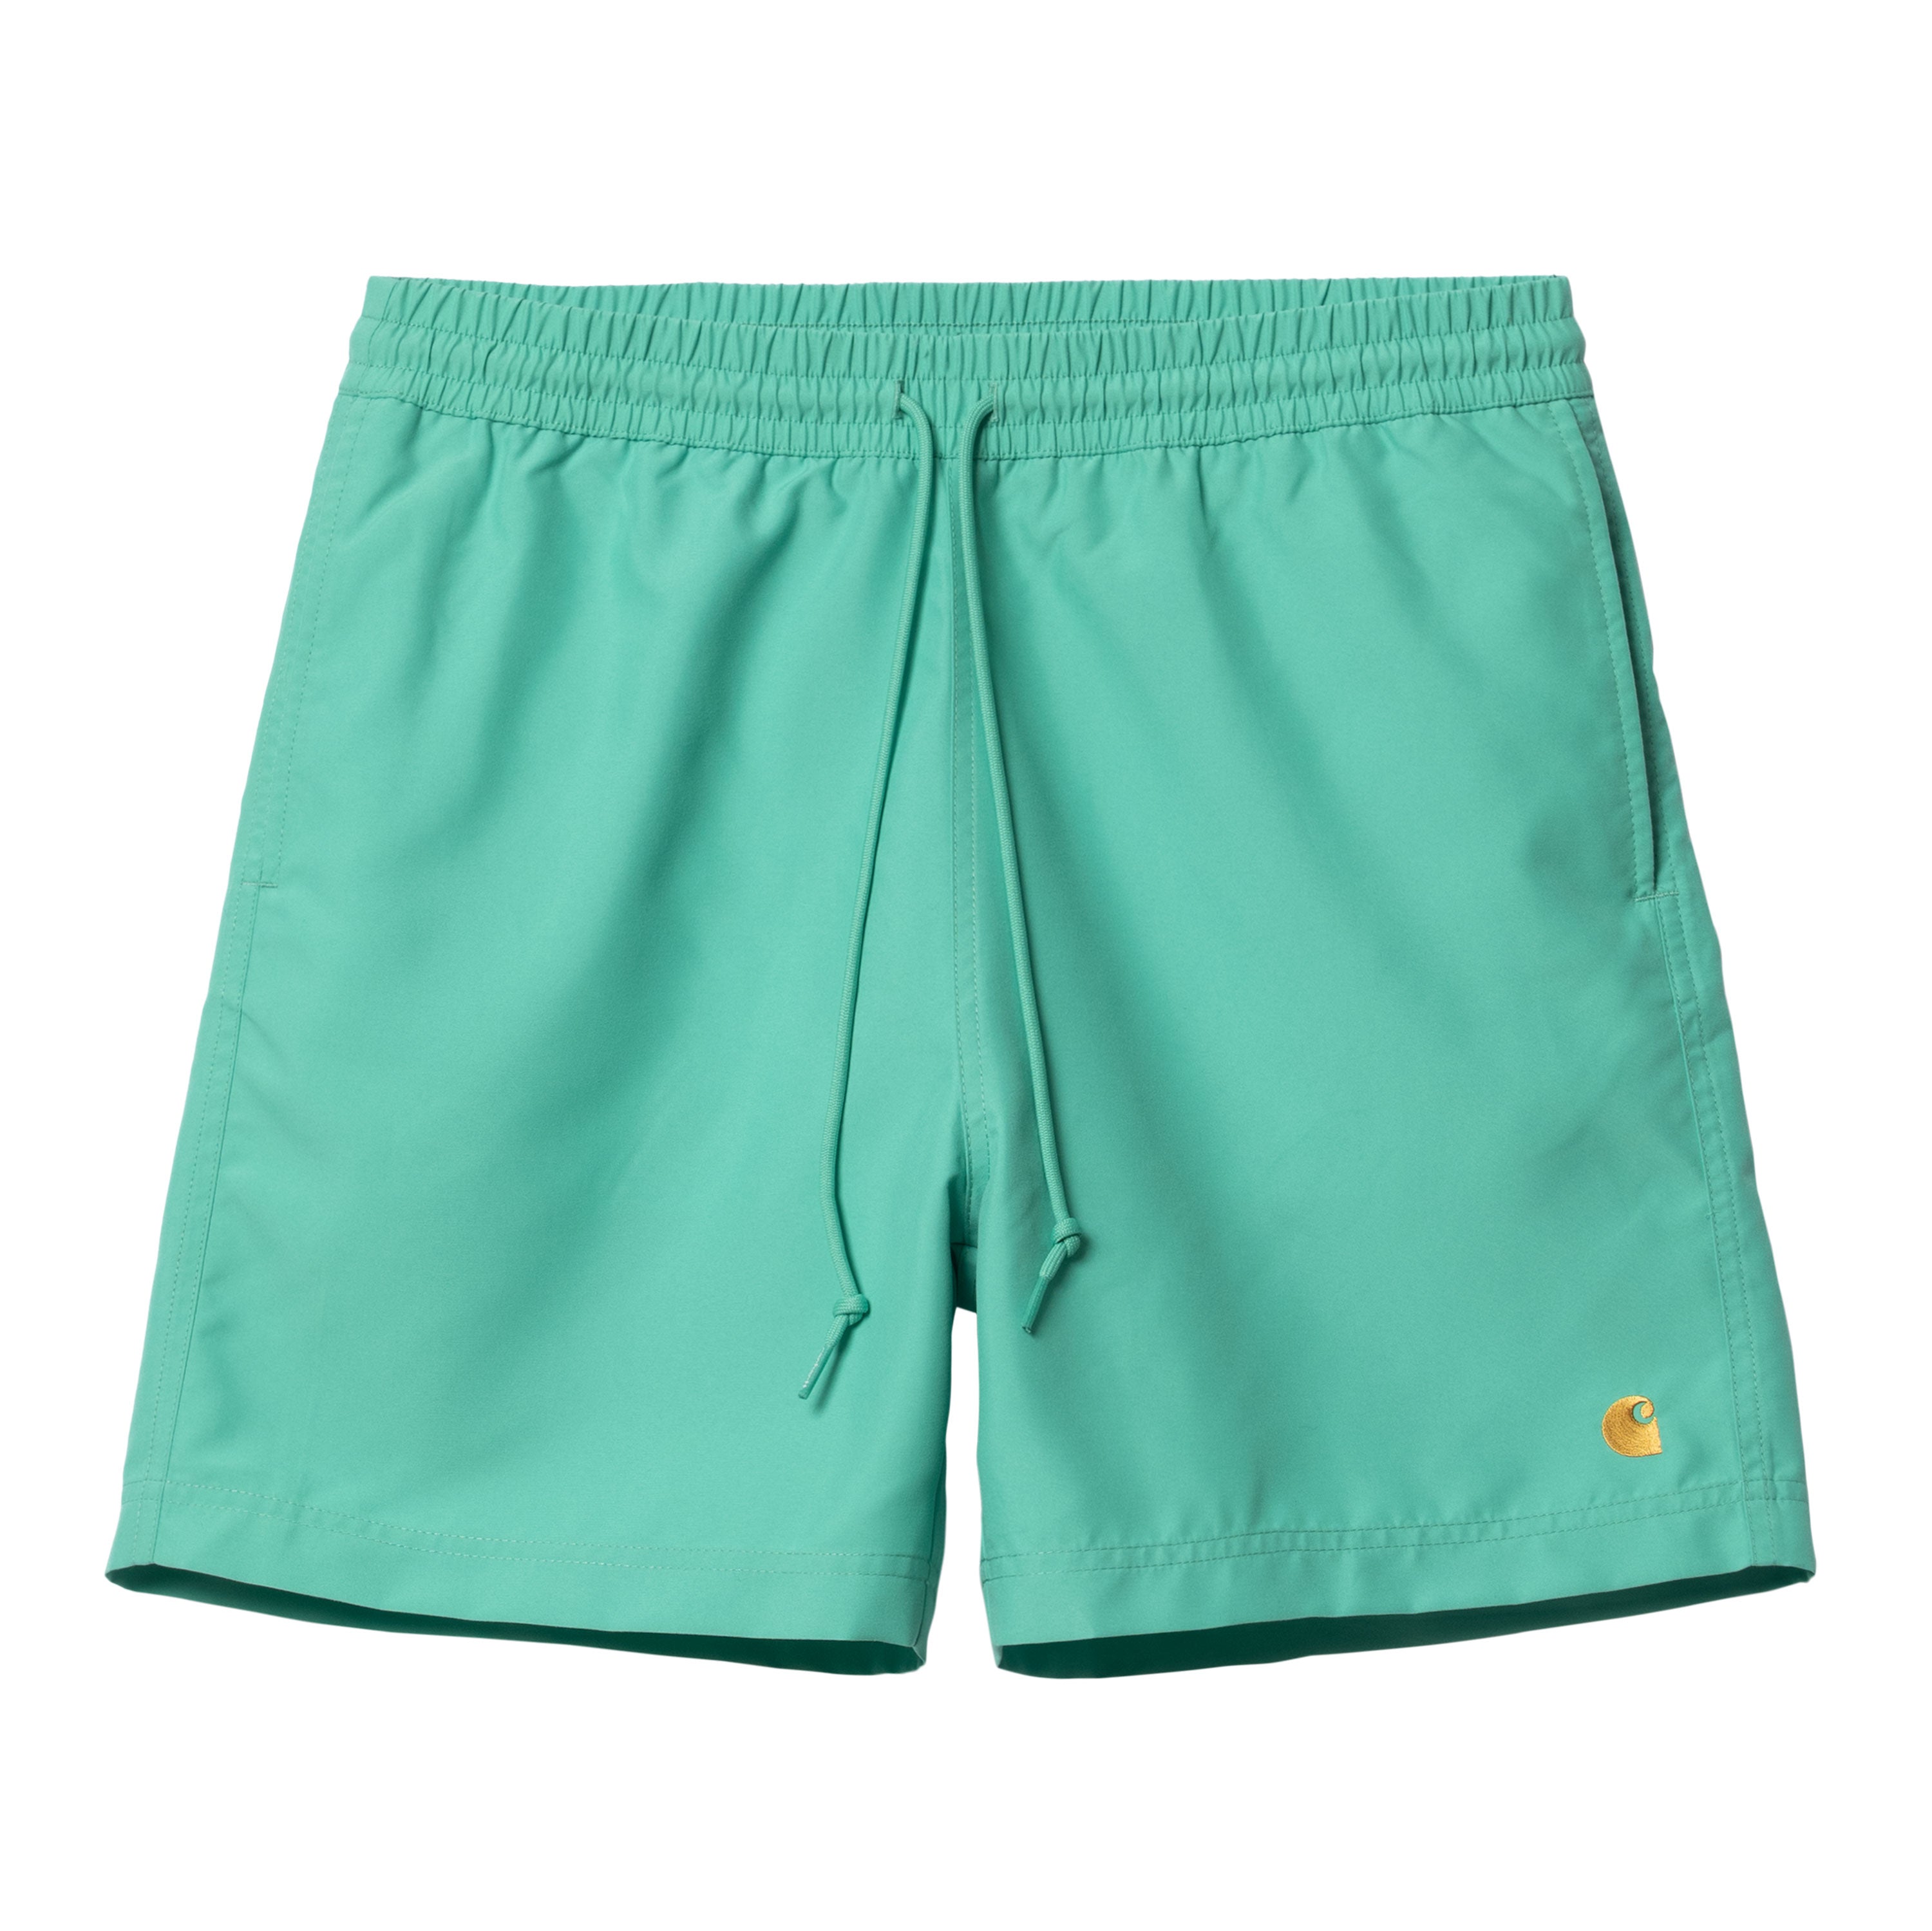 Carhartt WIP Chase Swim Shorts - Aqua Green/Gold